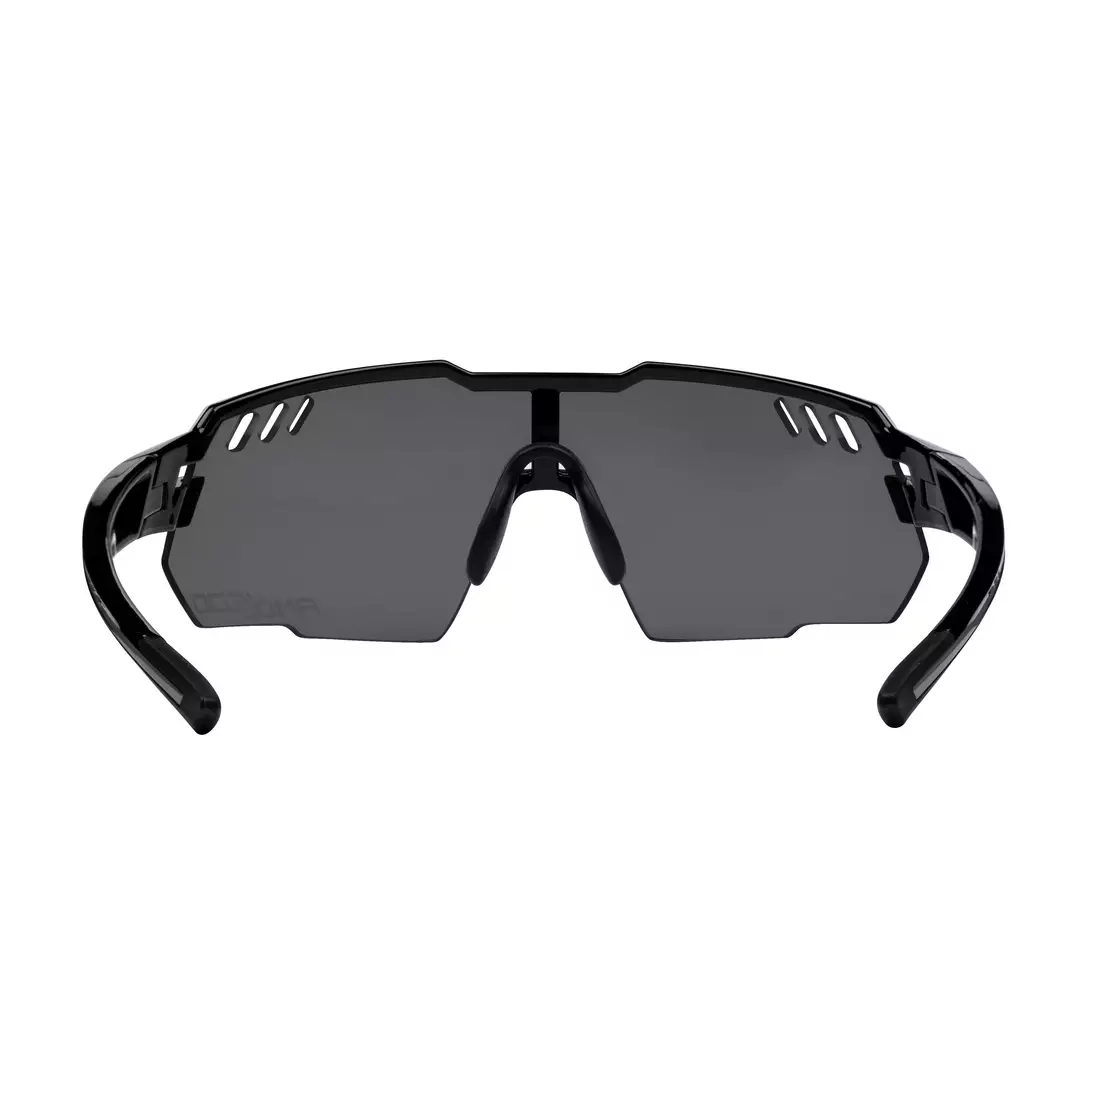 FORCE sports glasses AMOLEDO, black and gray 910881